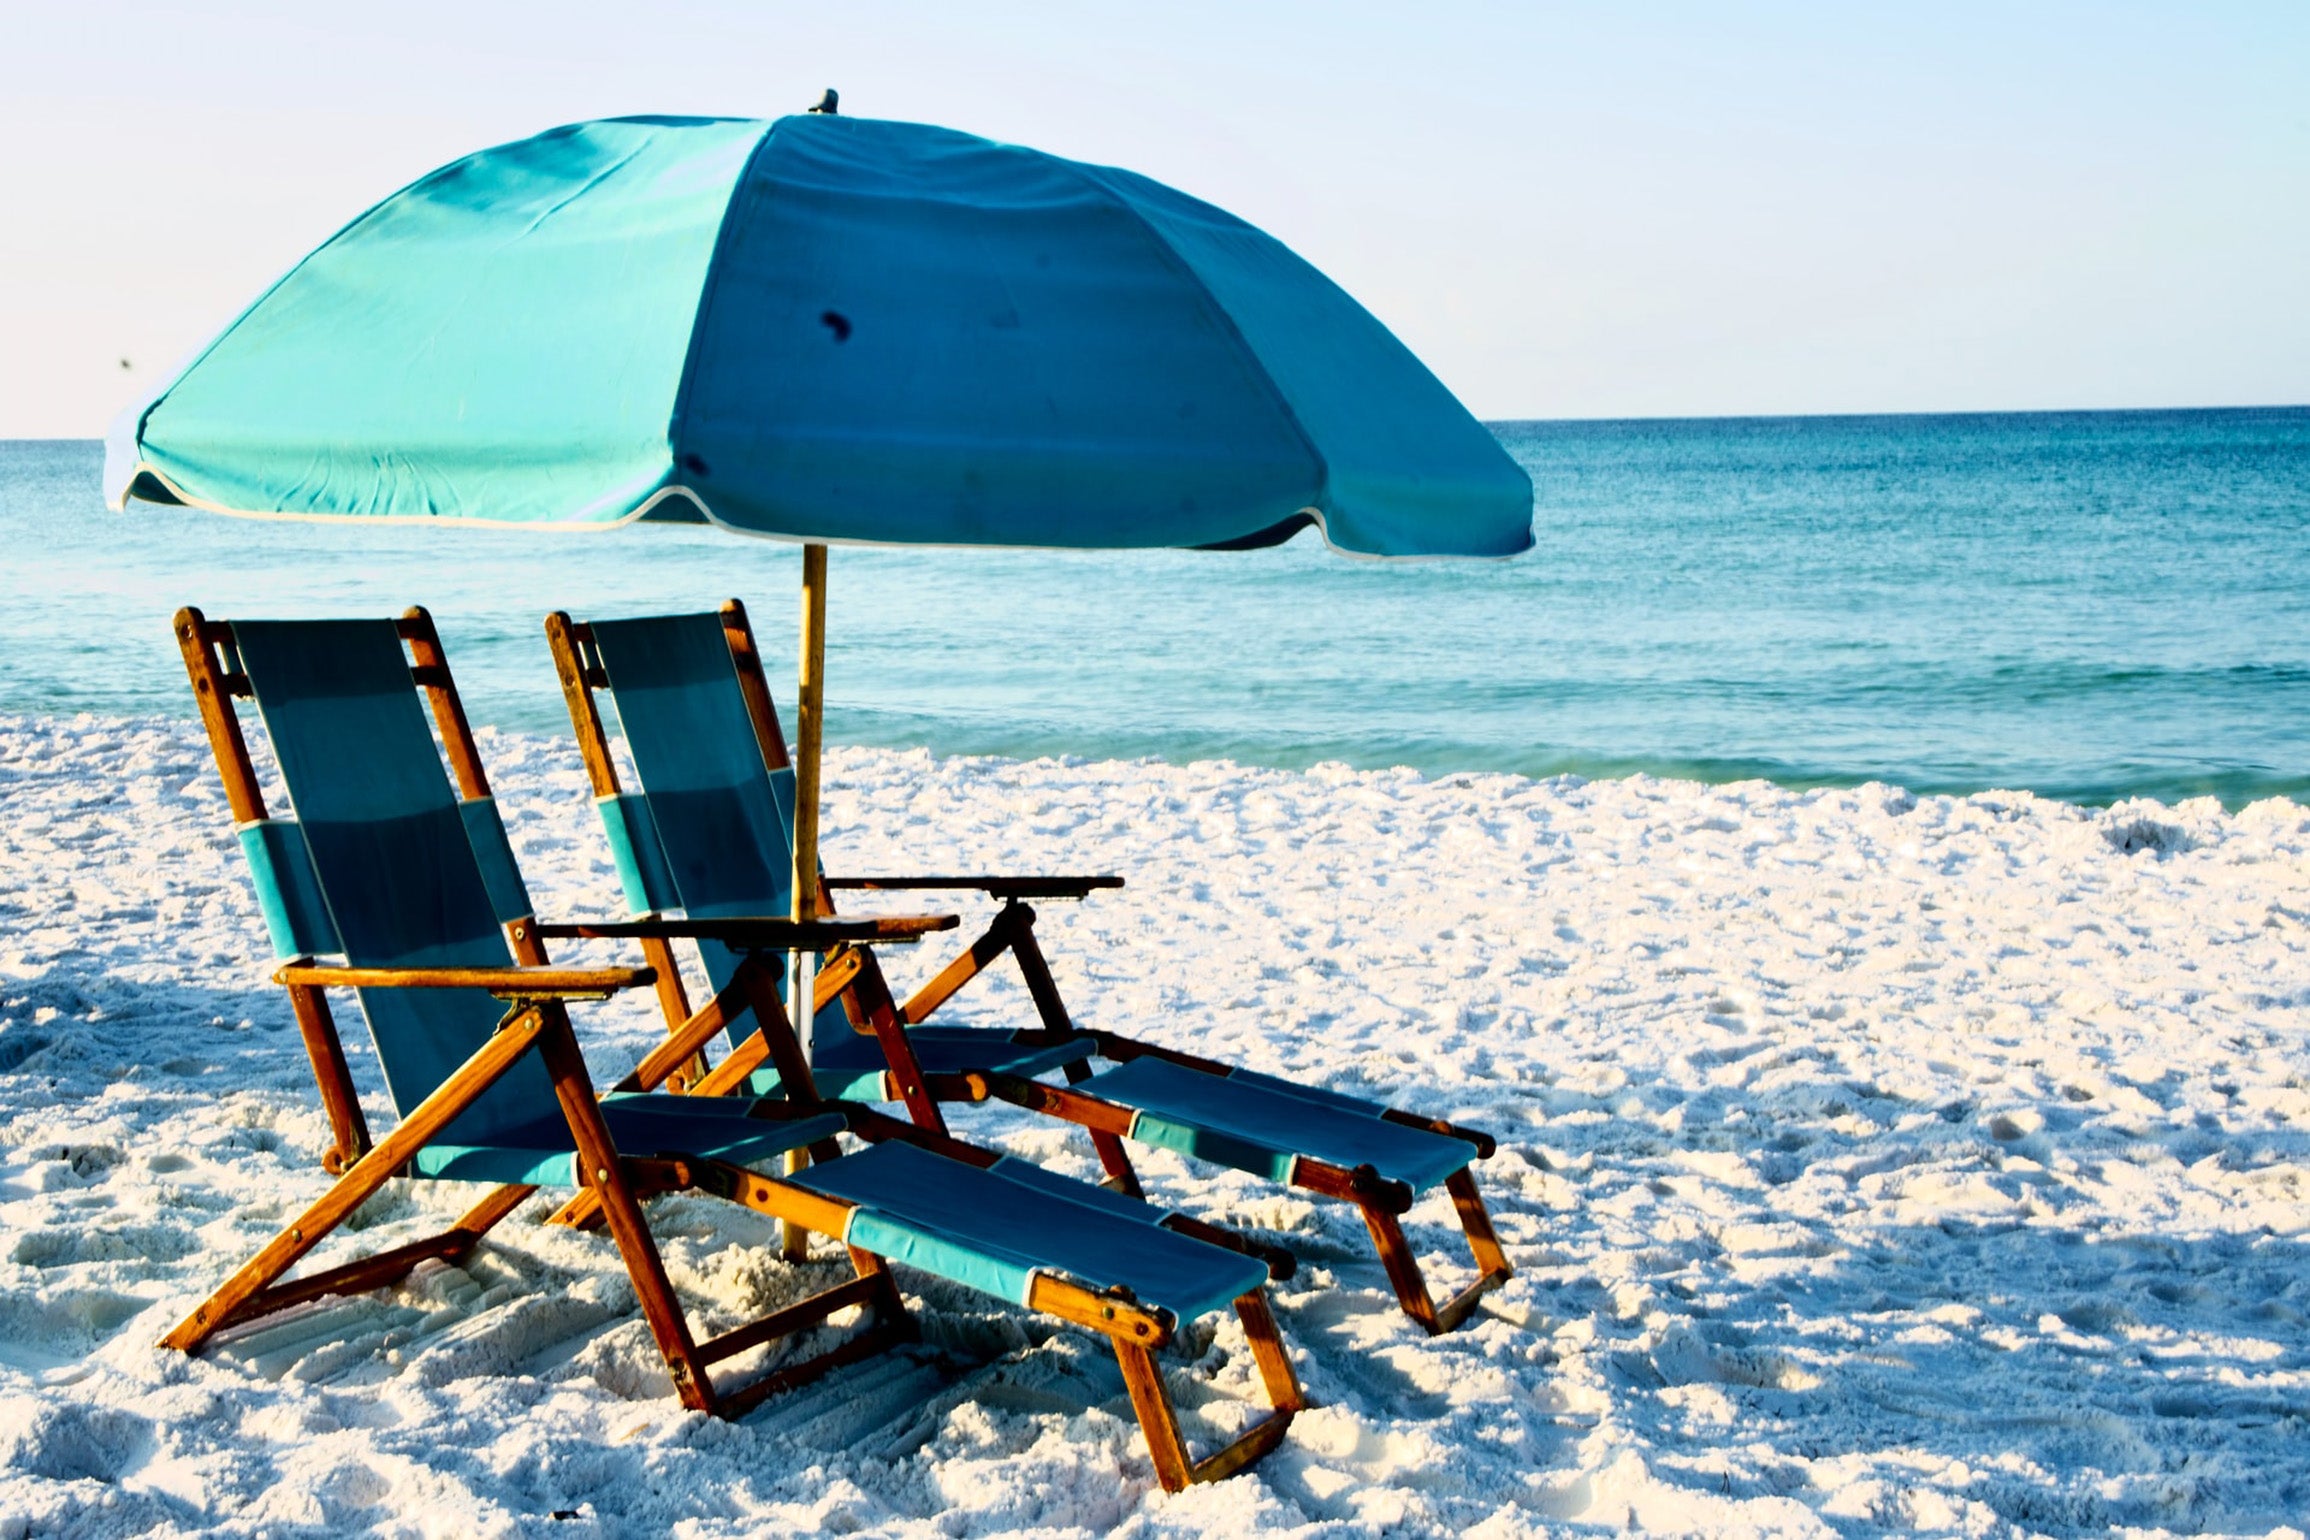 FREE Seasonal beach chair service provided